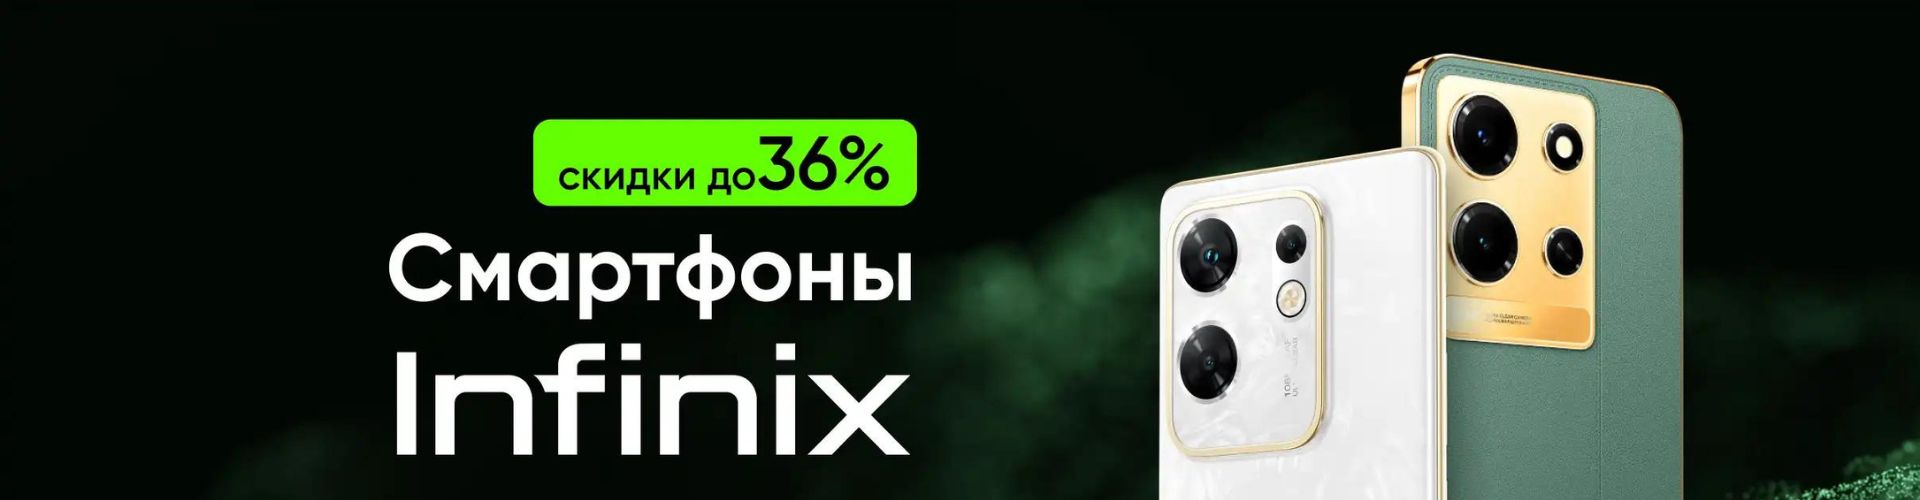 Скидки до 36% на смартфоны Infinix в Xistore